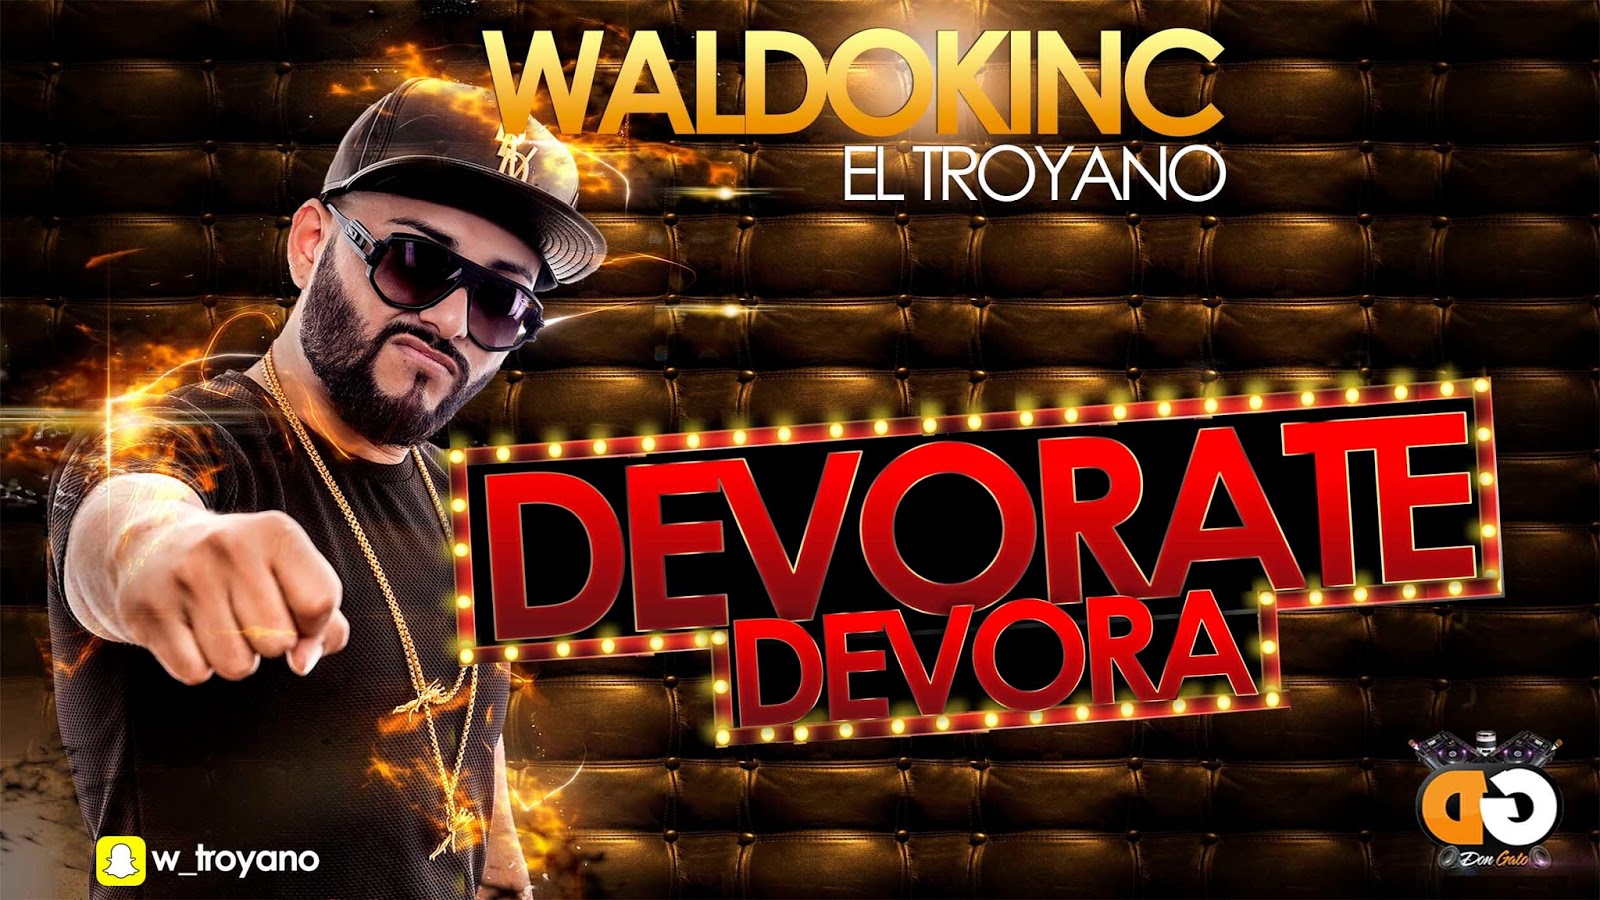 Waldokinc El Troyano Devorate Devora | DJ GENIO REMIX